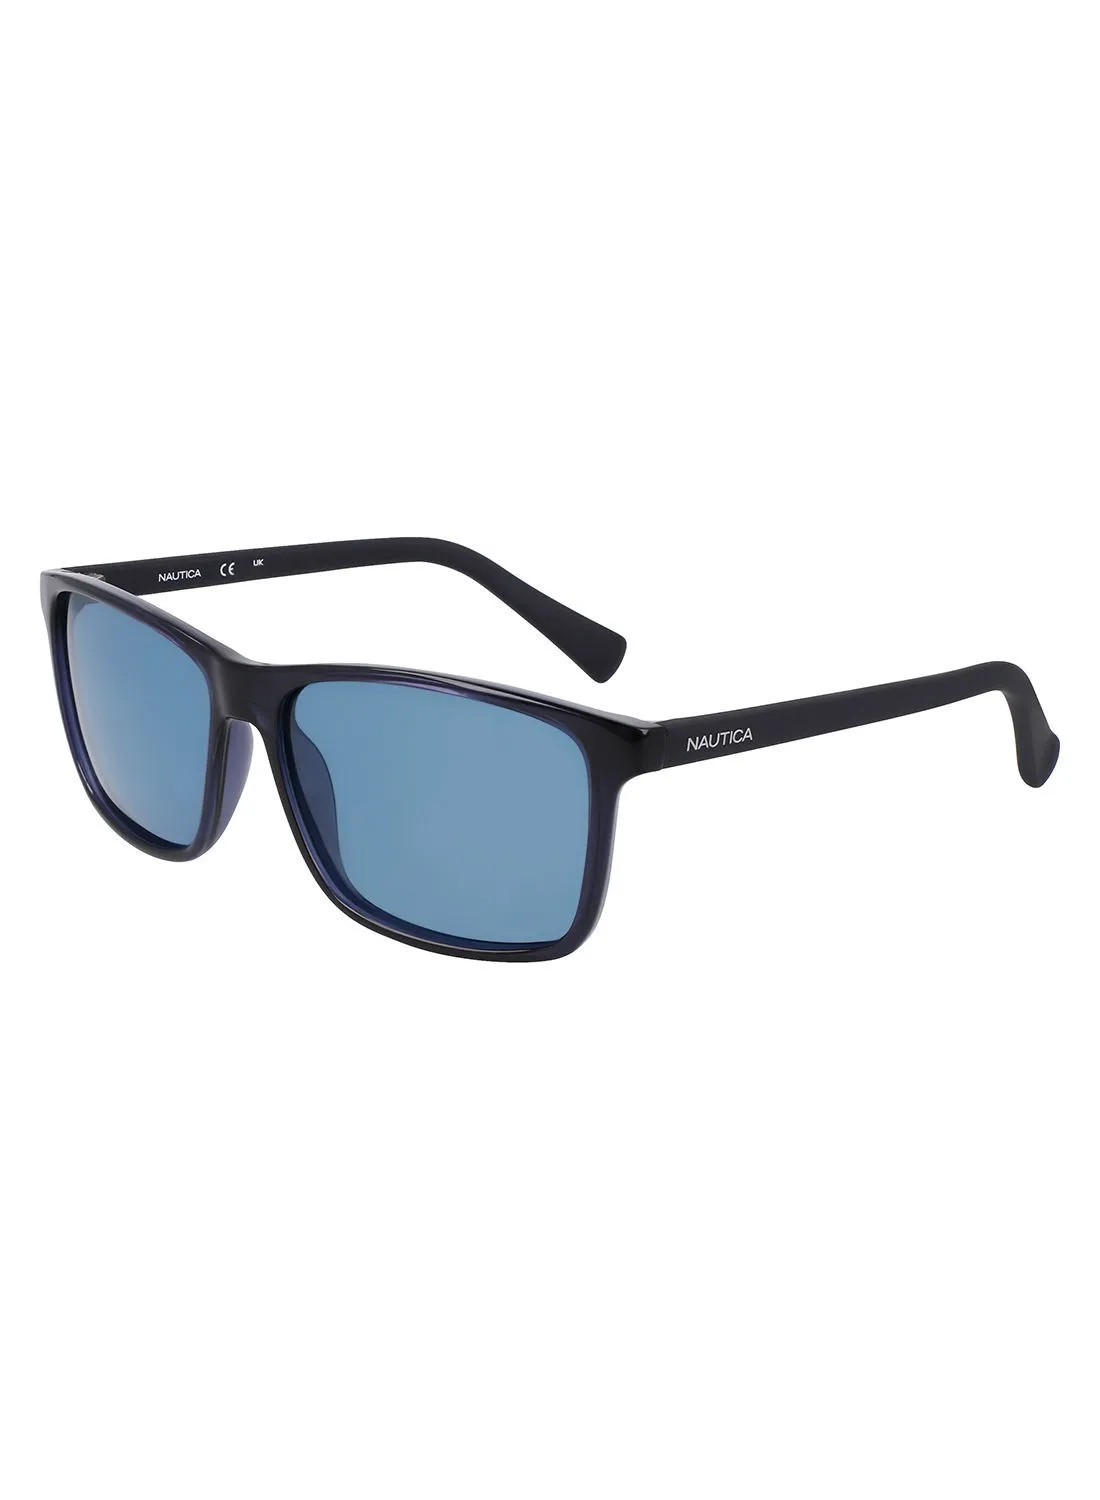 NAUTICA Men's Rectangular Sunglasses - N2246S-410-5815 - Lens Size: 58 Mm